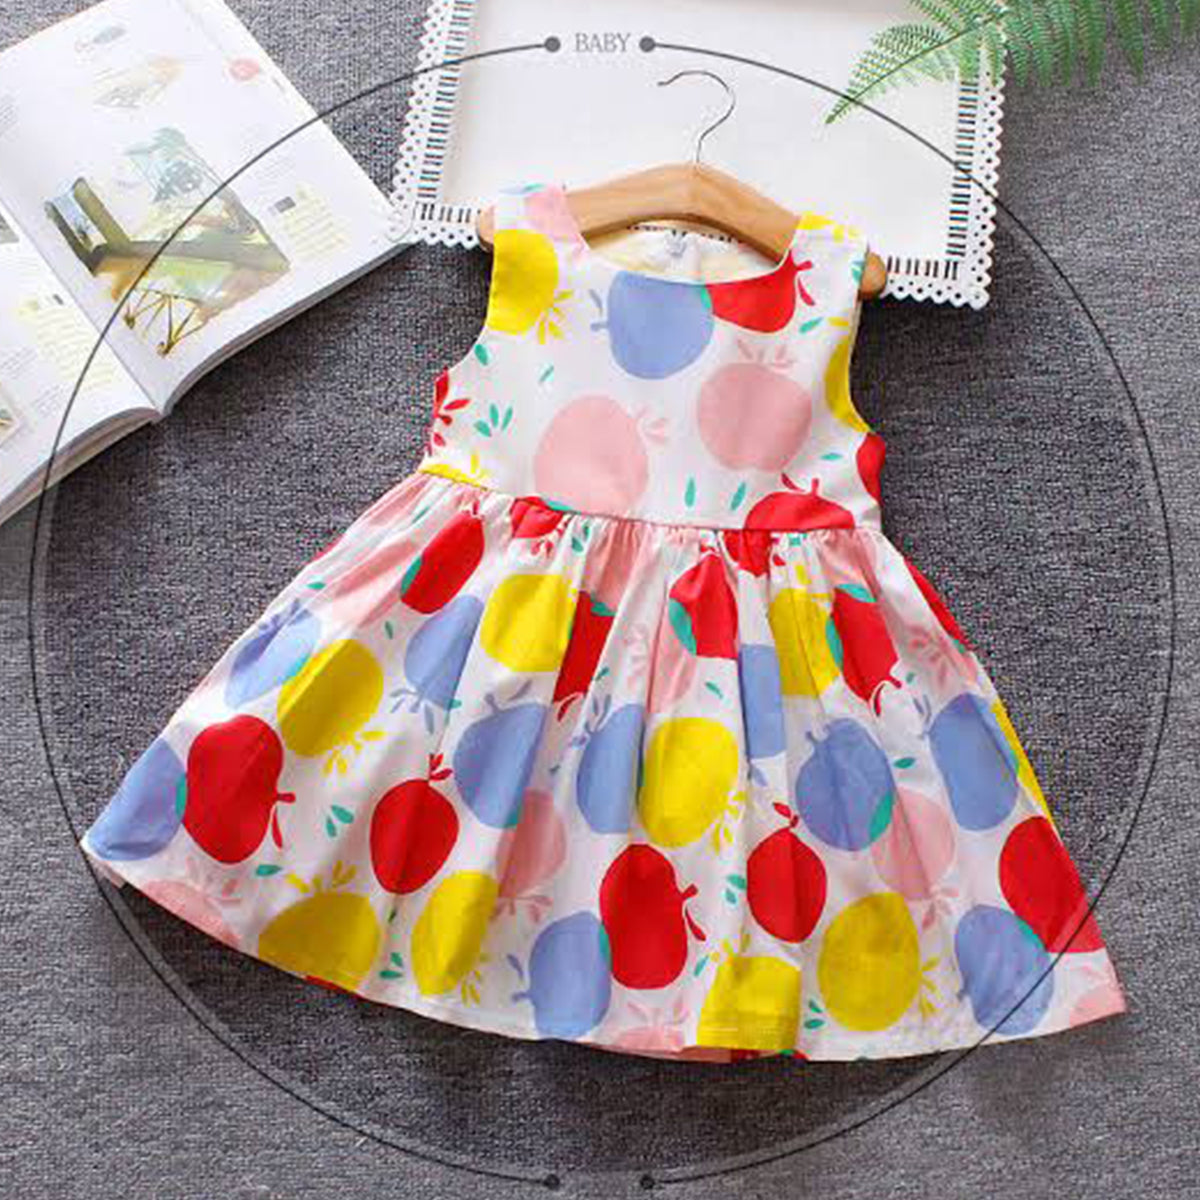 Venutaloza Princess Stylish Designer Multicolor Round Frock & Dresses for Baby Girl.